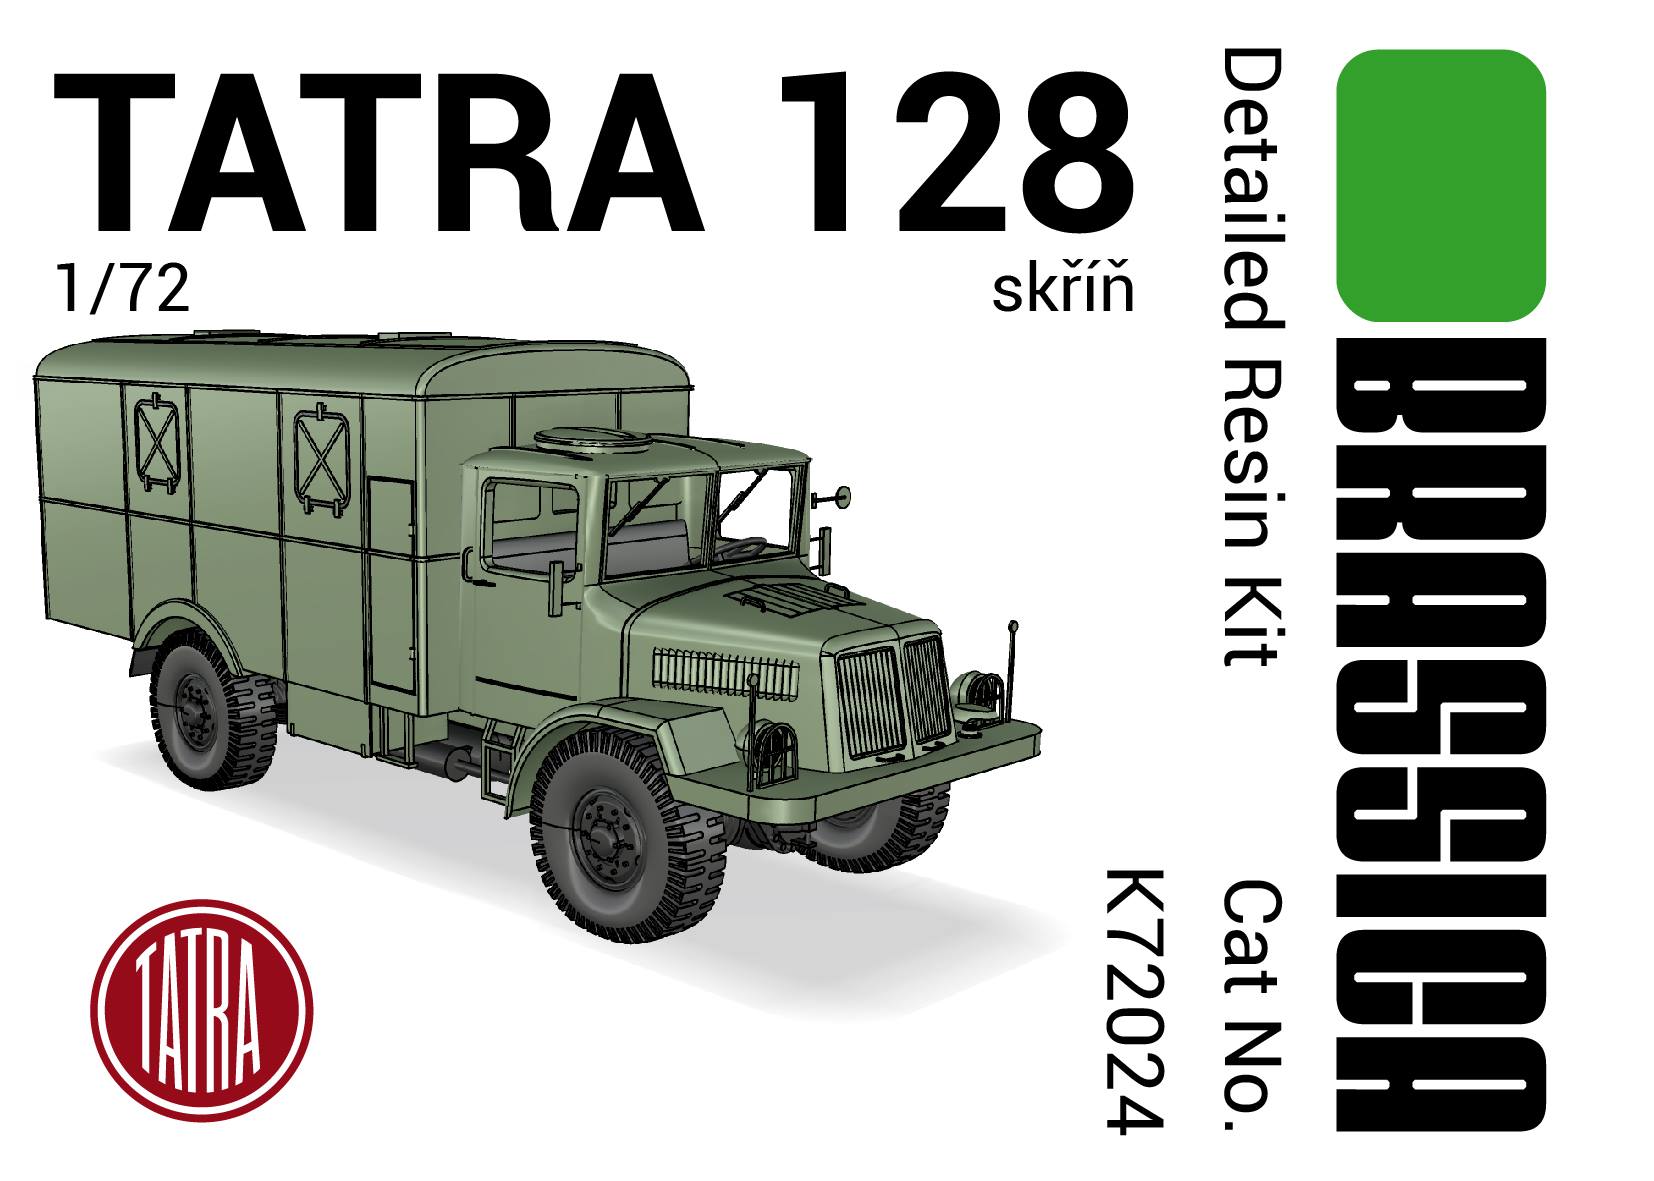 Tatra 128 command/workshop